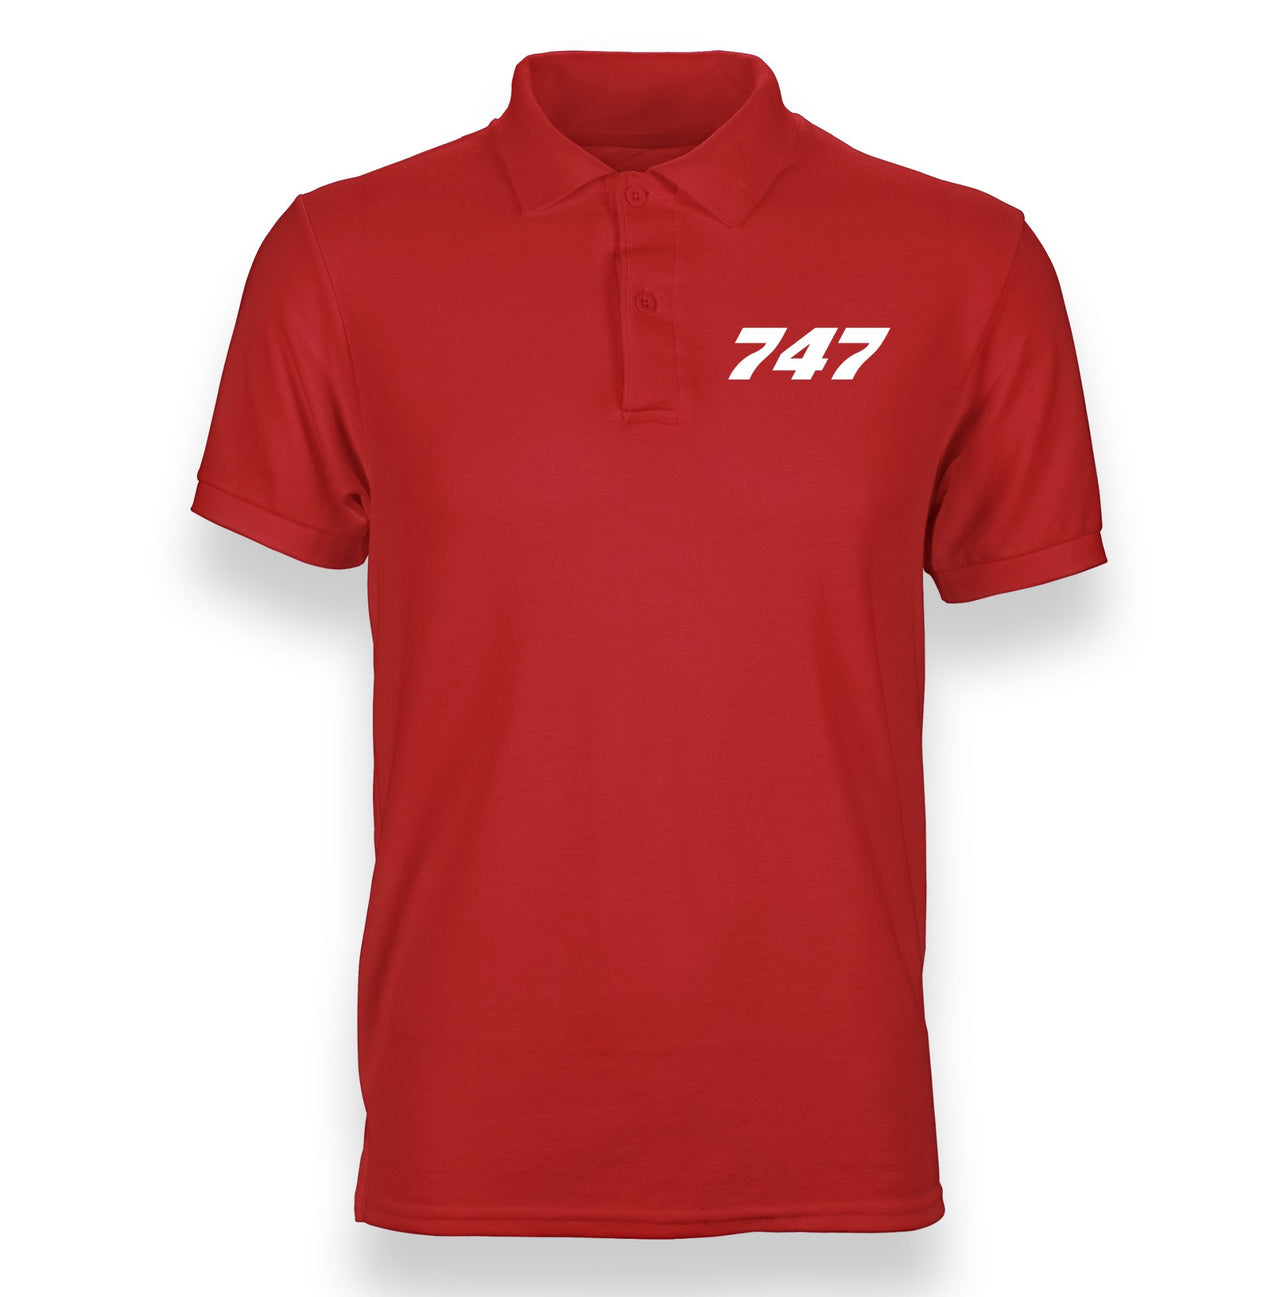 747 Flat Text Designed "WOMEN" Polo T-Shirts